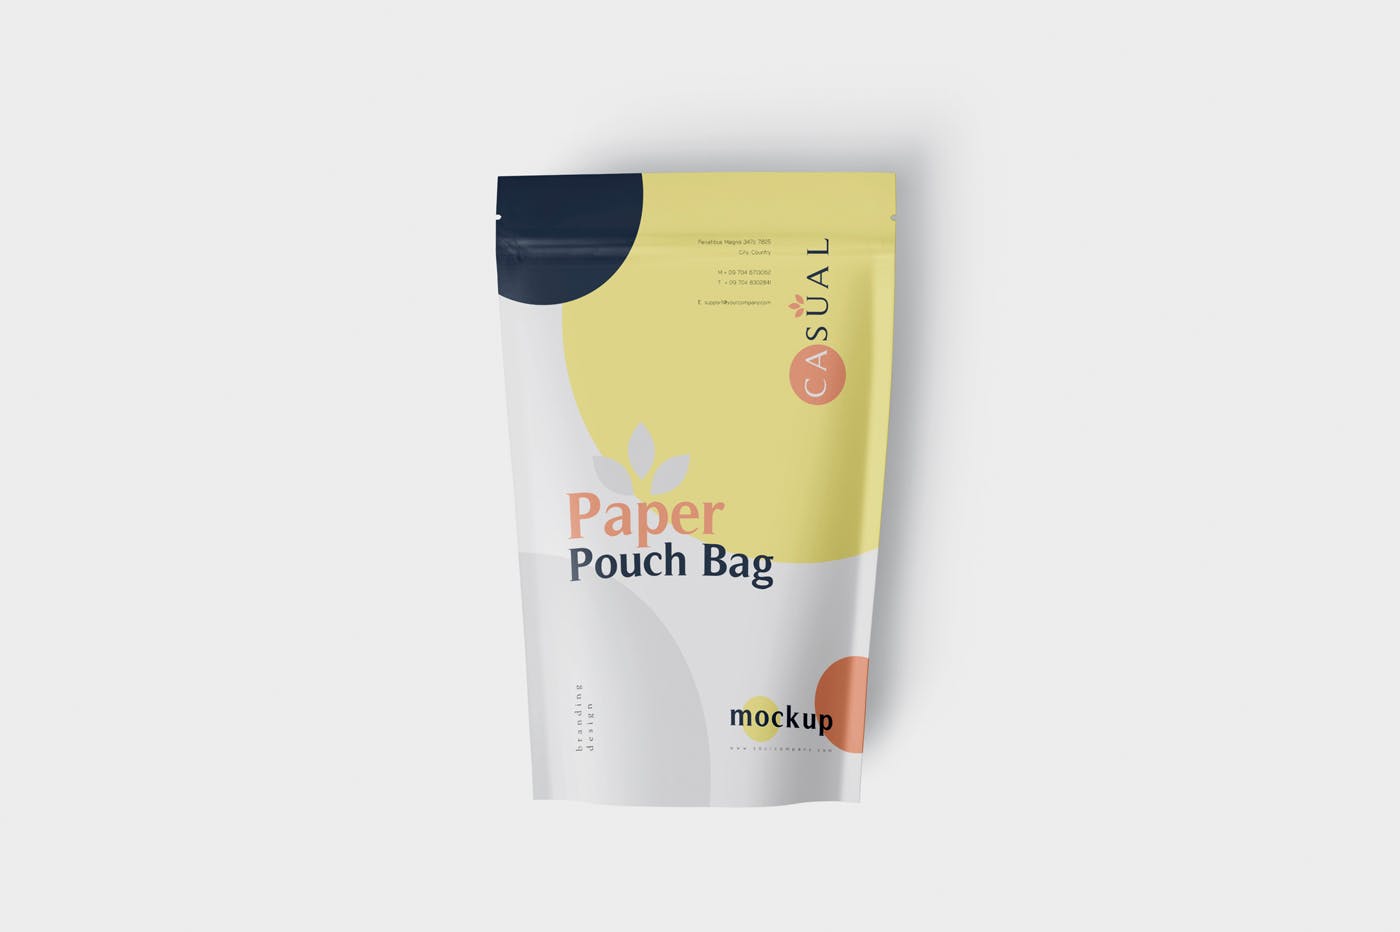 食品自封袋包装设计效果图素材库精选 Paper Pouch Bag Mockup – Large Size插图(3)